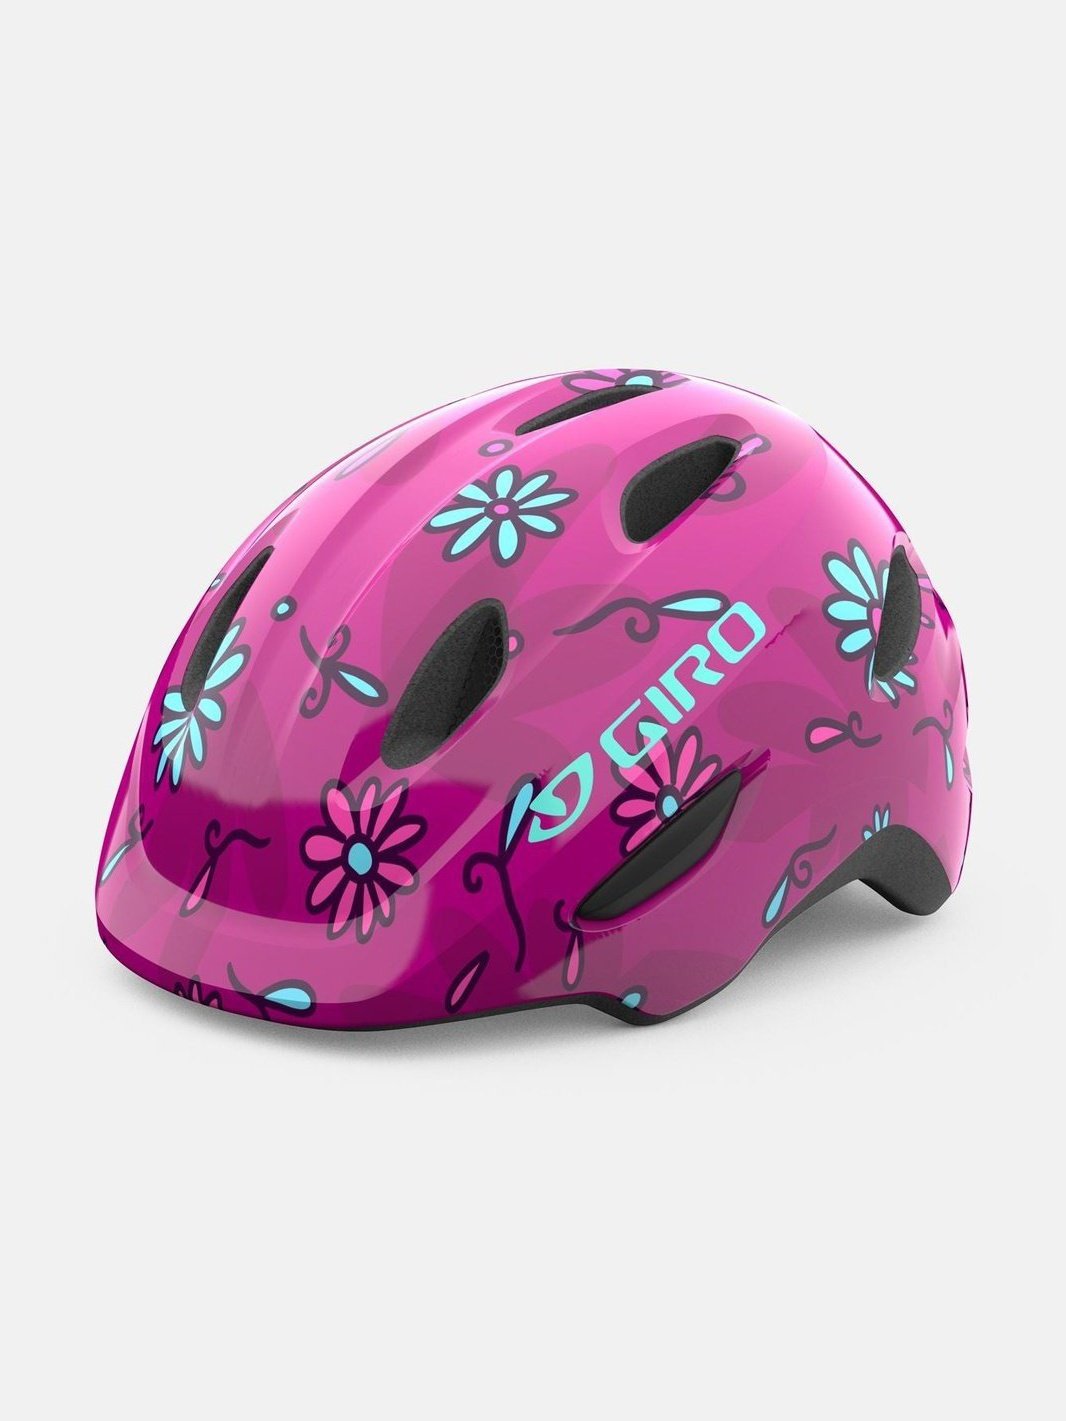 Giro Scamp MIPS Small Youth Helmet